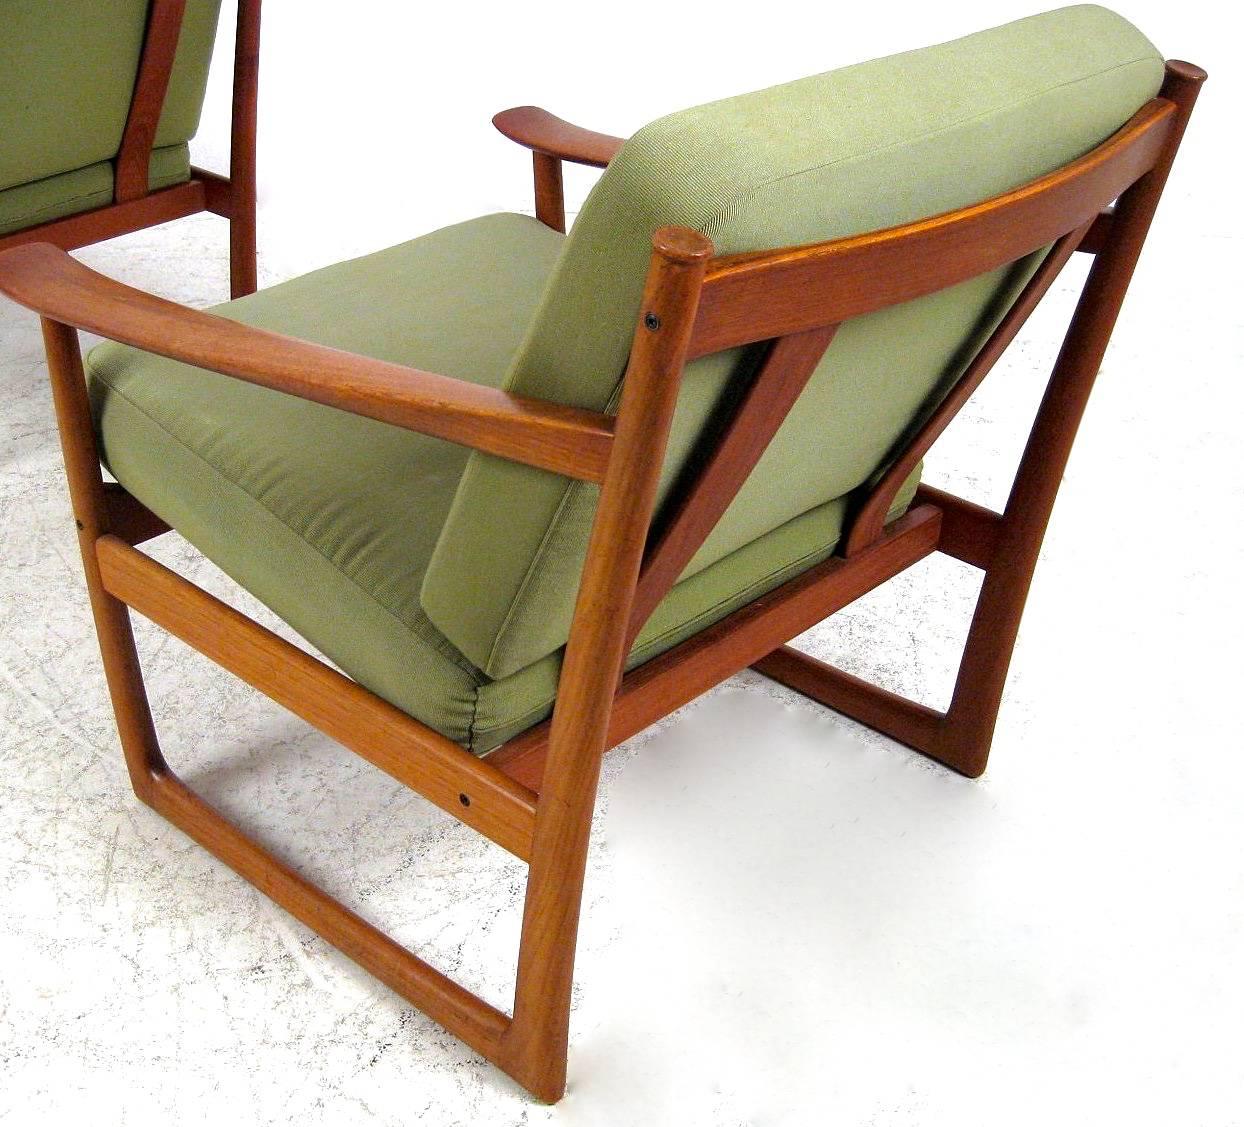 Scandinavian Modern Danish Mid-Century Teak Easy Chair by Peter Hvidt & Orla Mølgaard-Nielsen FD 130 For Sale